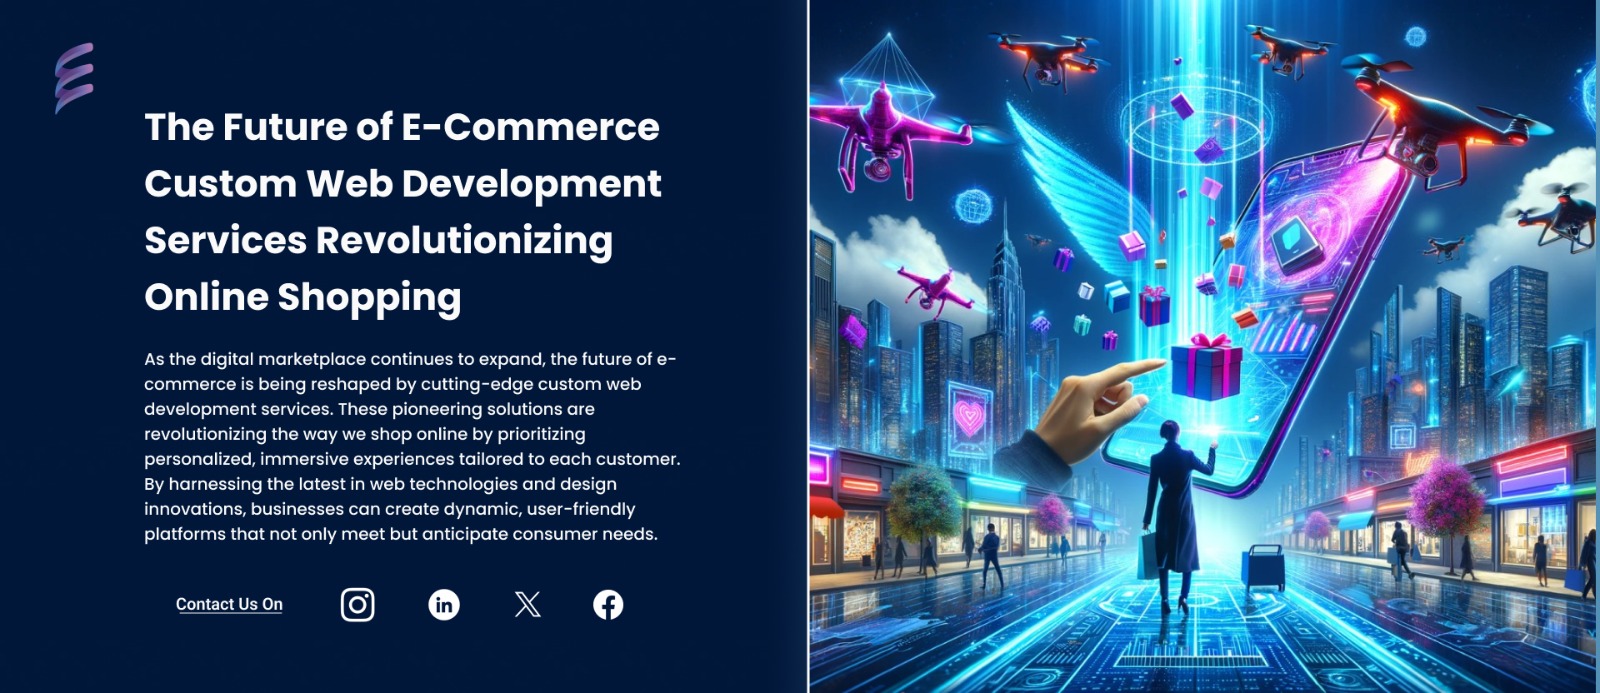 The Future of E-Commerce Custom Web Development Services Revolutionizing Online Shopping